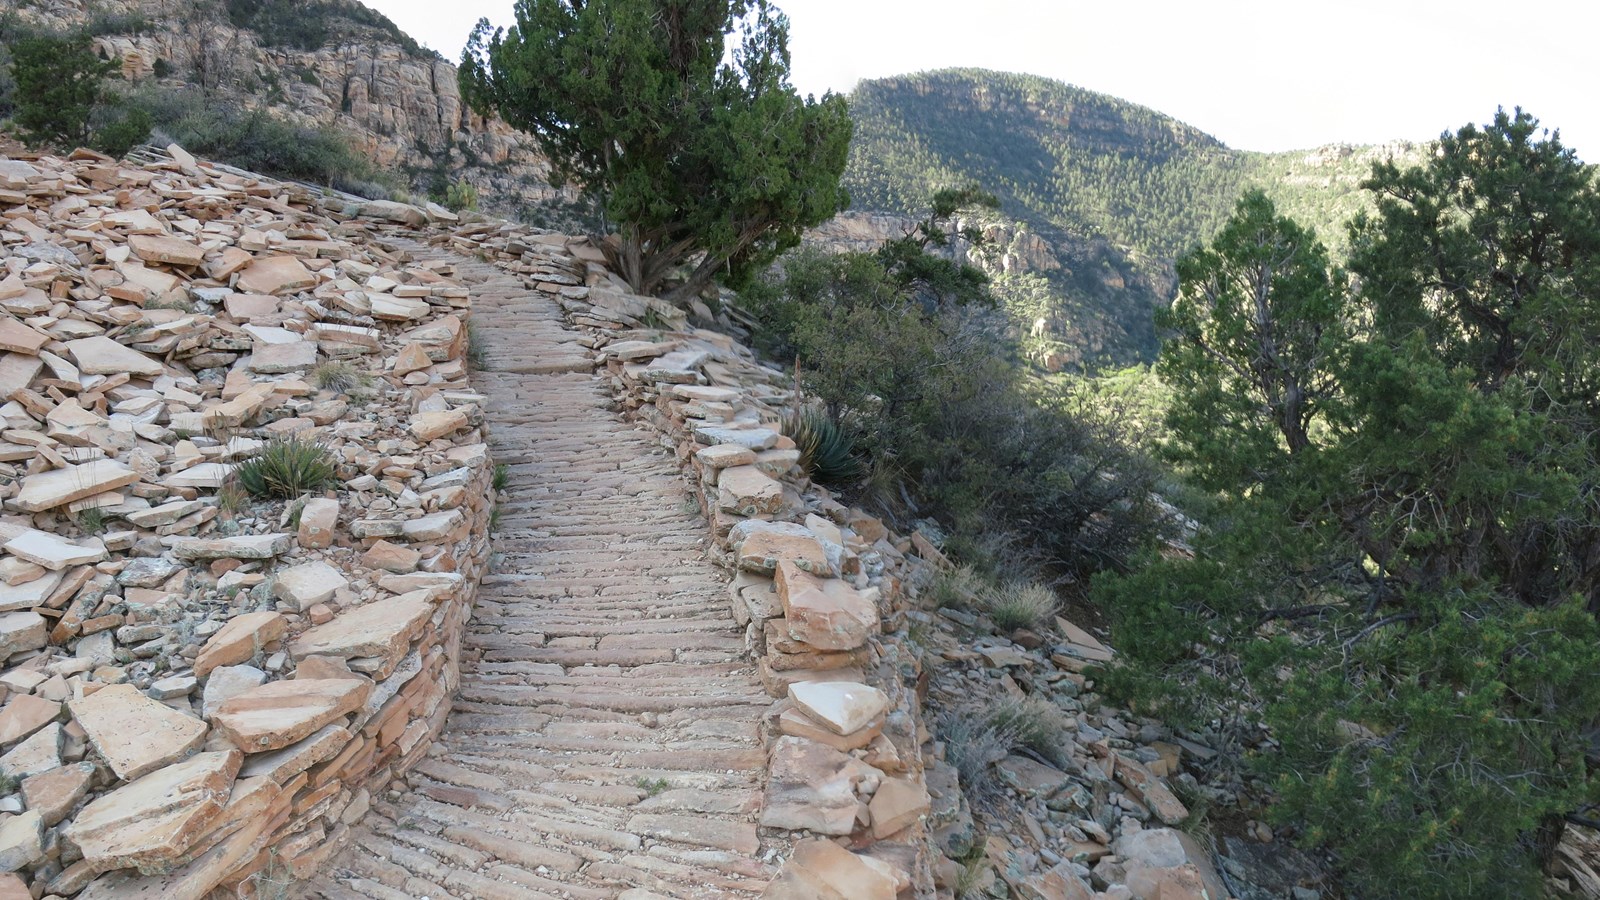 The Hermit Trail